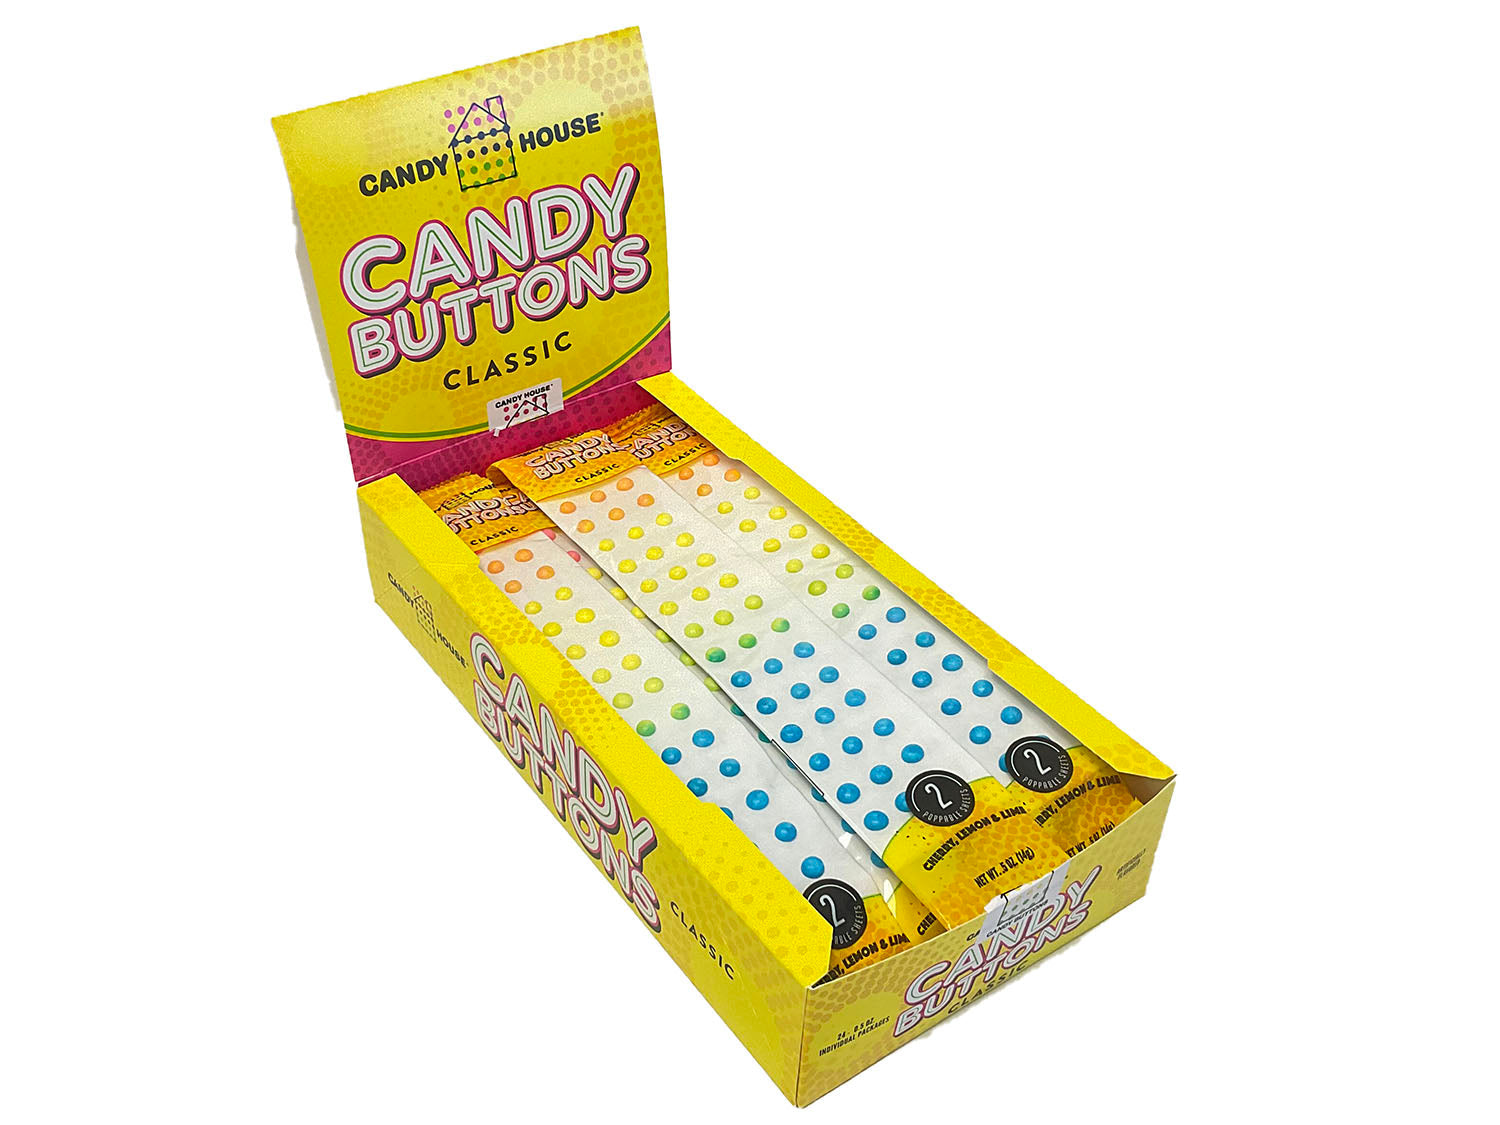 Candy Buttons - 2-piece pkg - box of 24 open